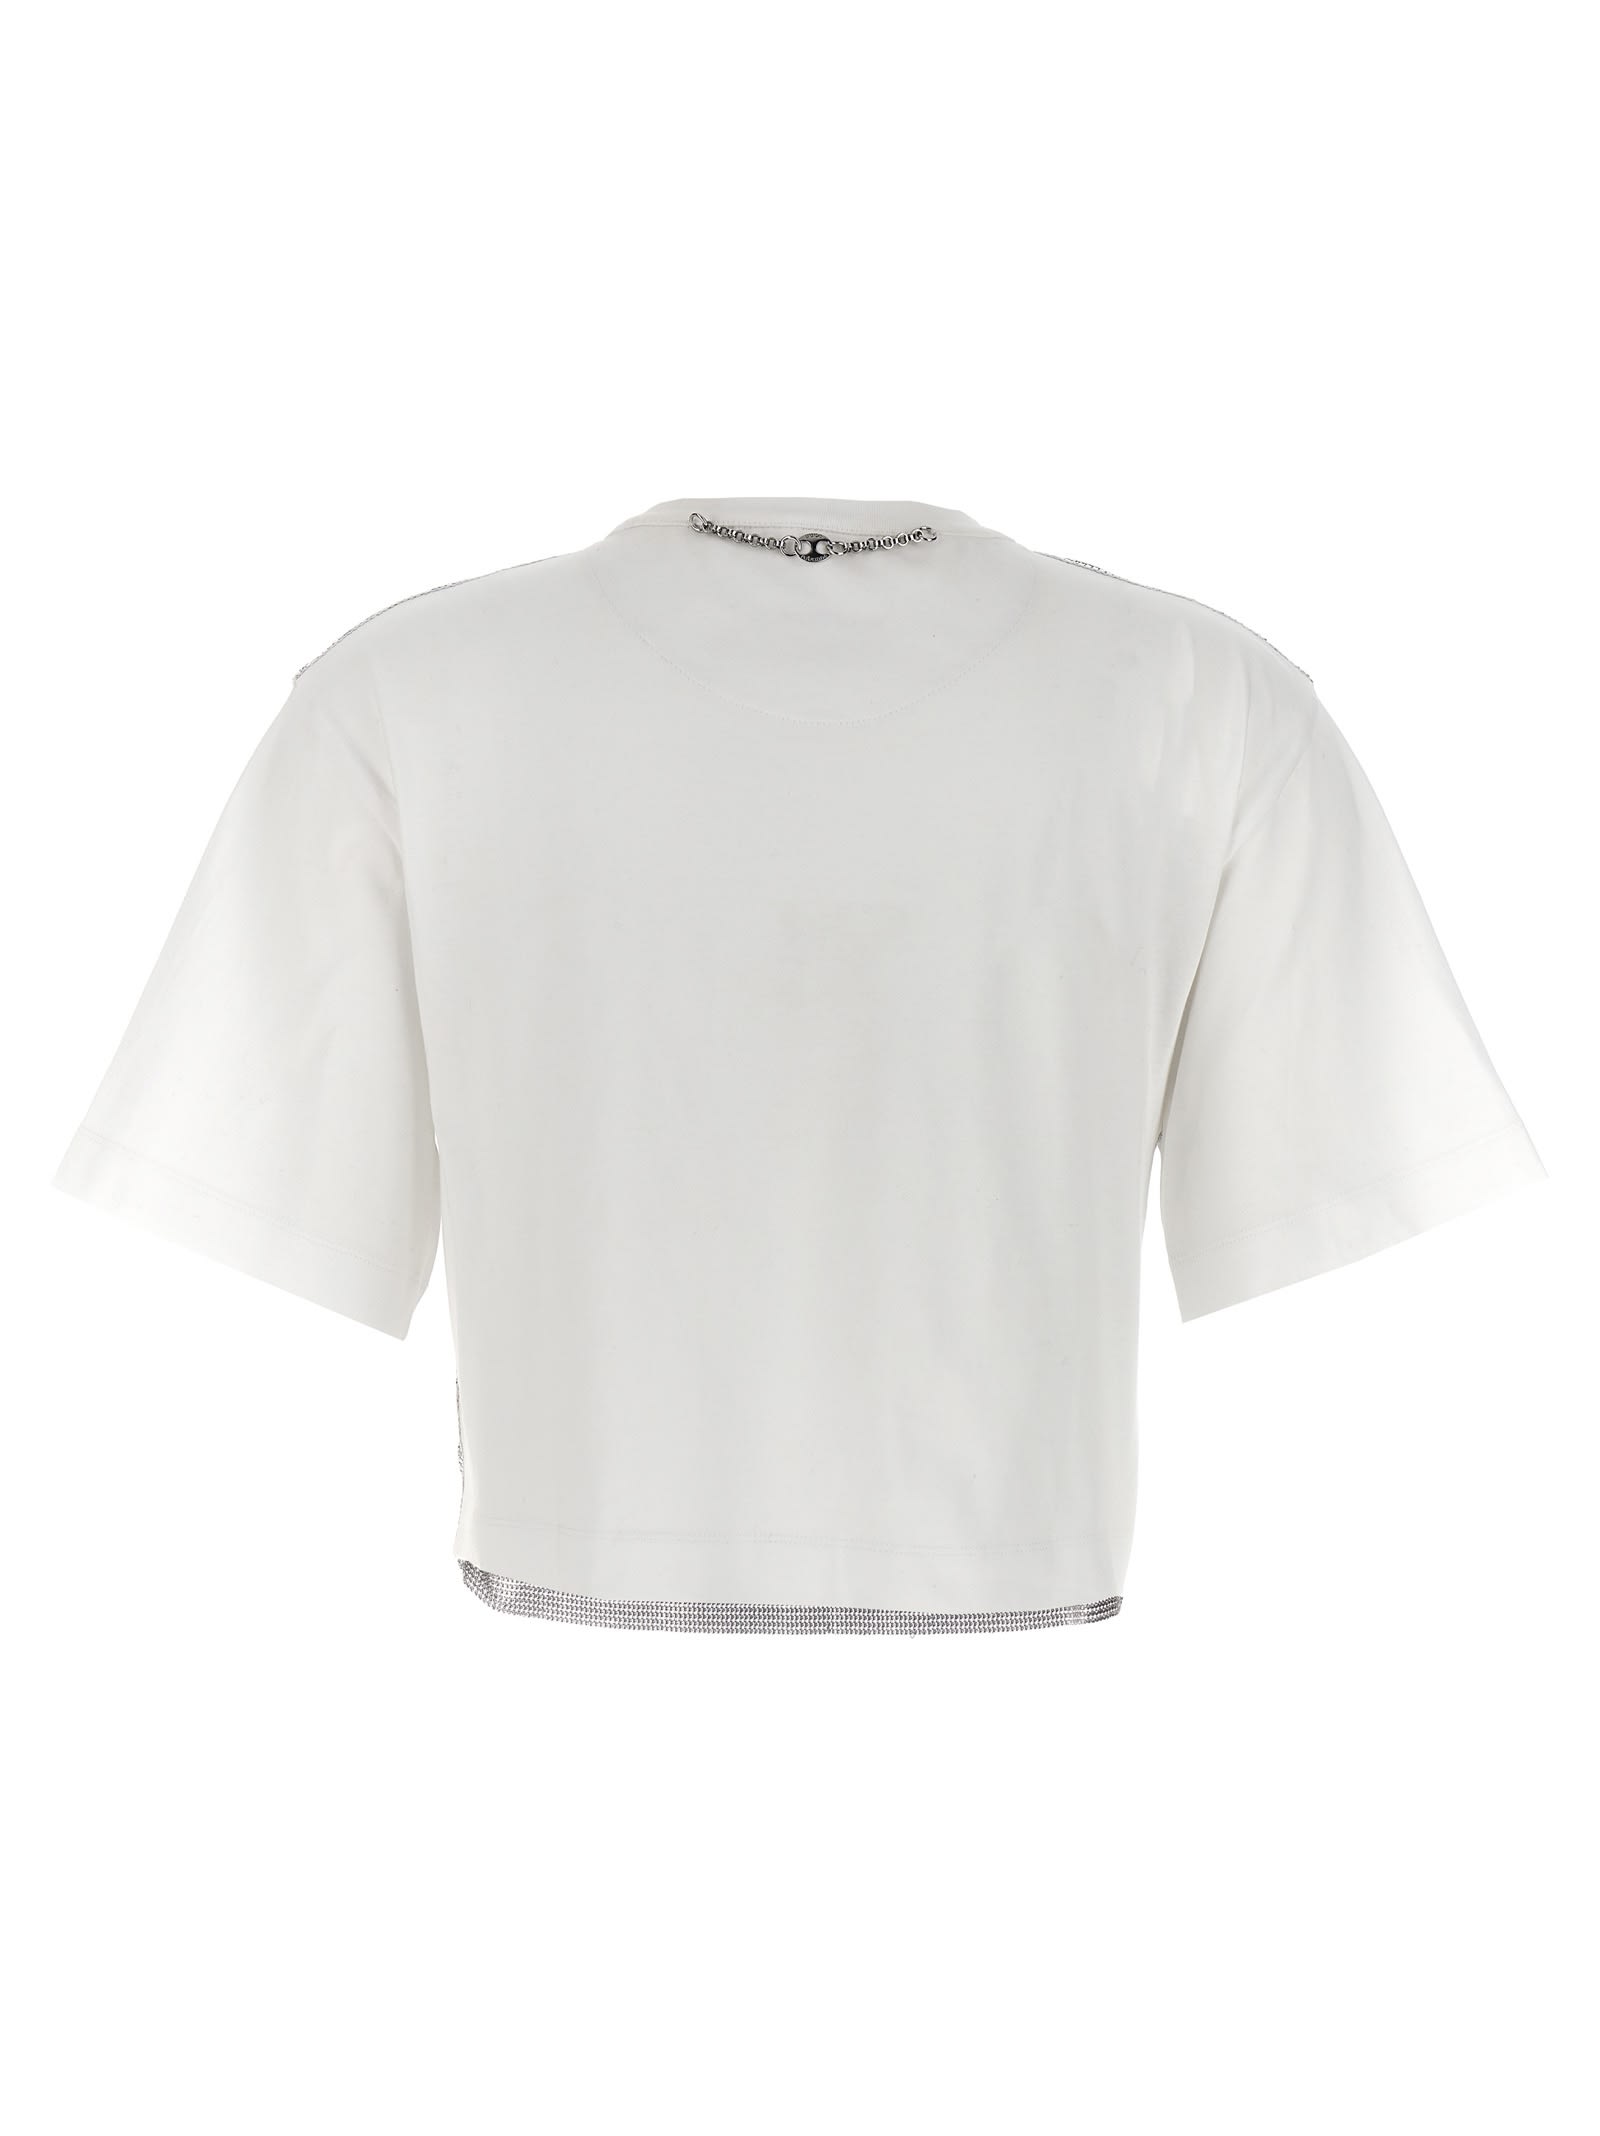 Shop Paco Rabanne Metal Mesh T-shirt In Silver White